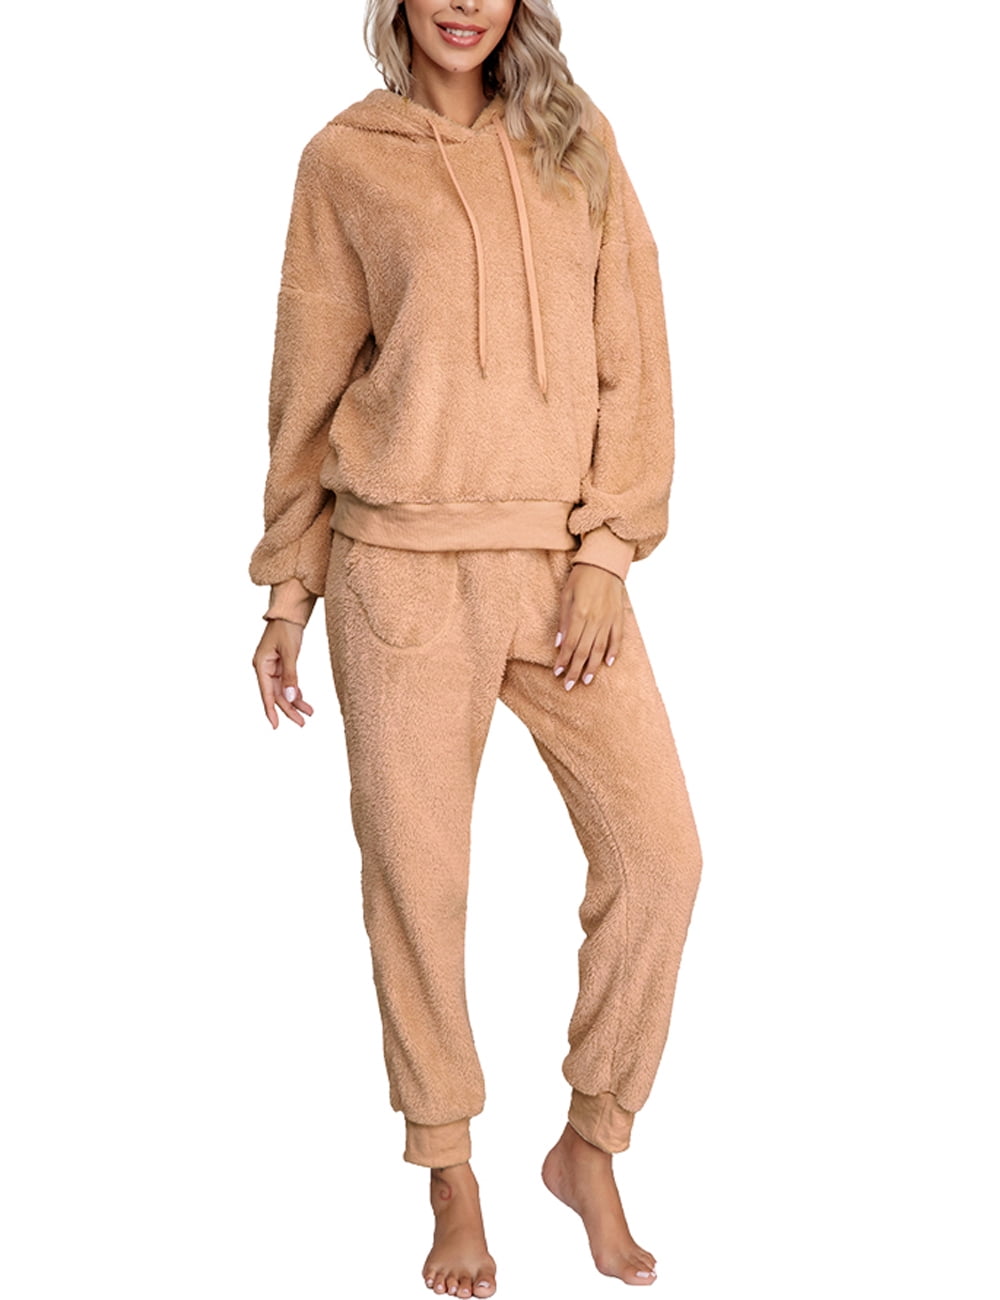 Details about   NWT Lissome 2 Pc Set Loungewear Pajama PJ BLUE ANIMAL Rayon Spandex Long Length 